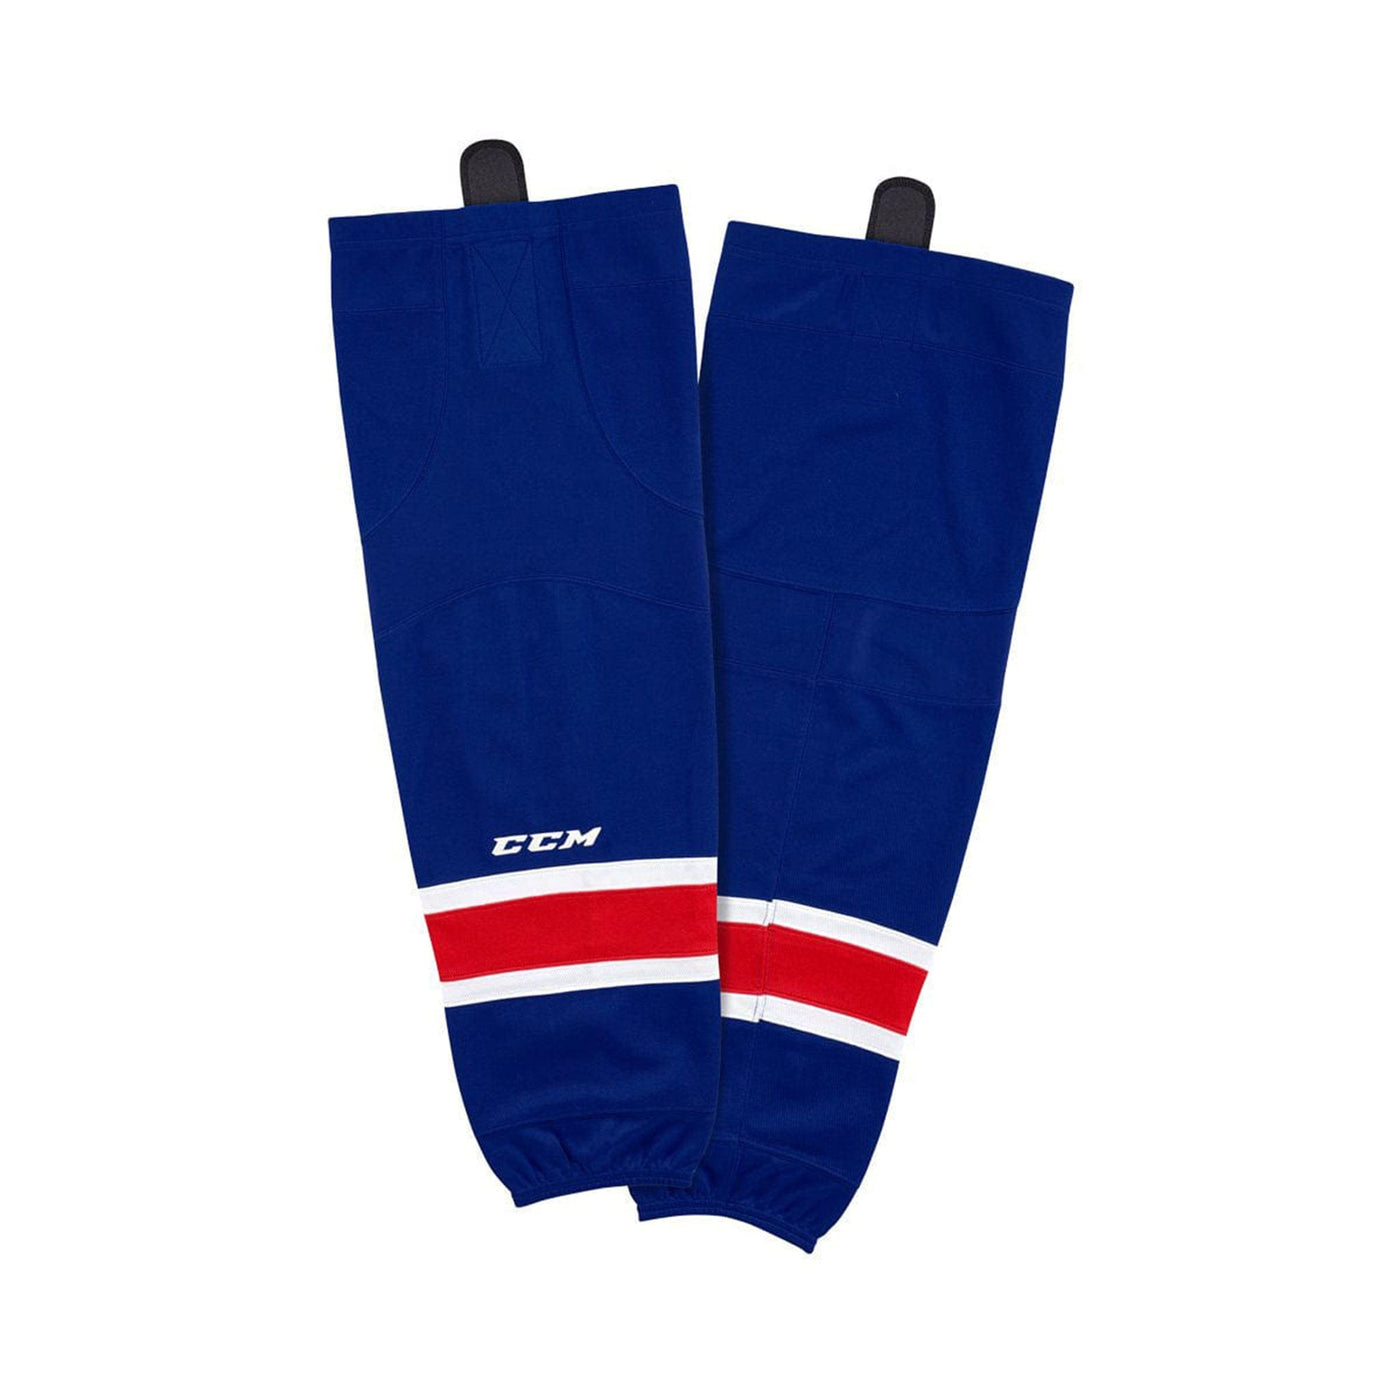 New York Rangers Home CCM Quicklite 8000 Hockey Socks - The Hockey Shop Source For Sports